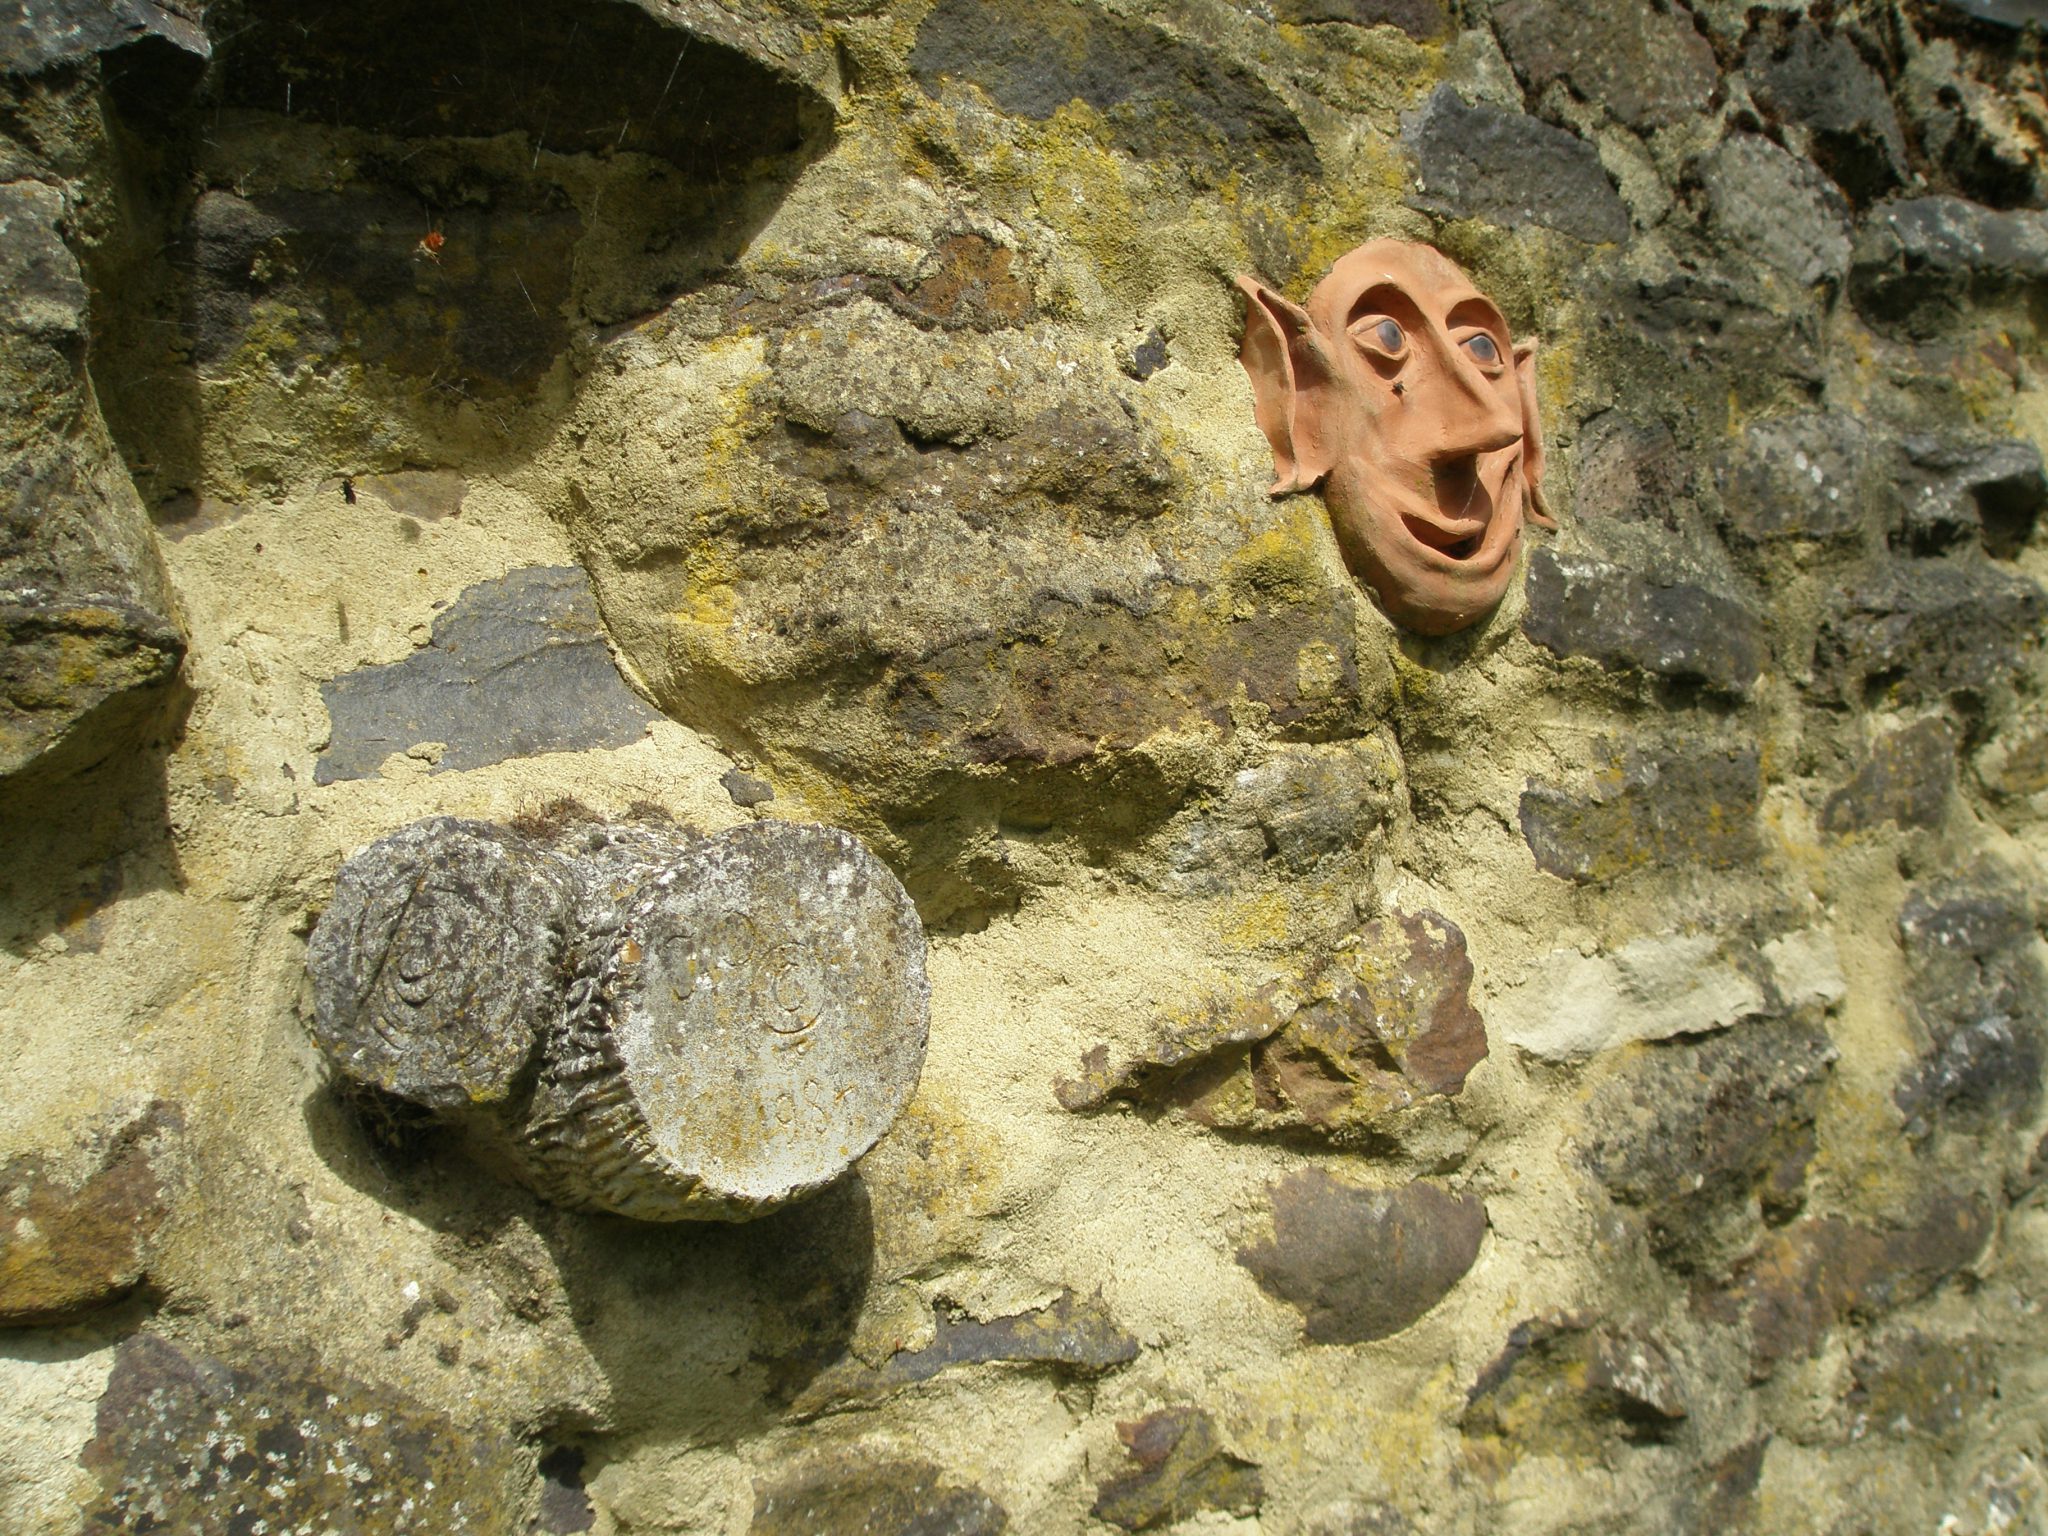 Faux Bois, and a Garden Sprite, mortared into a Ruin Wall